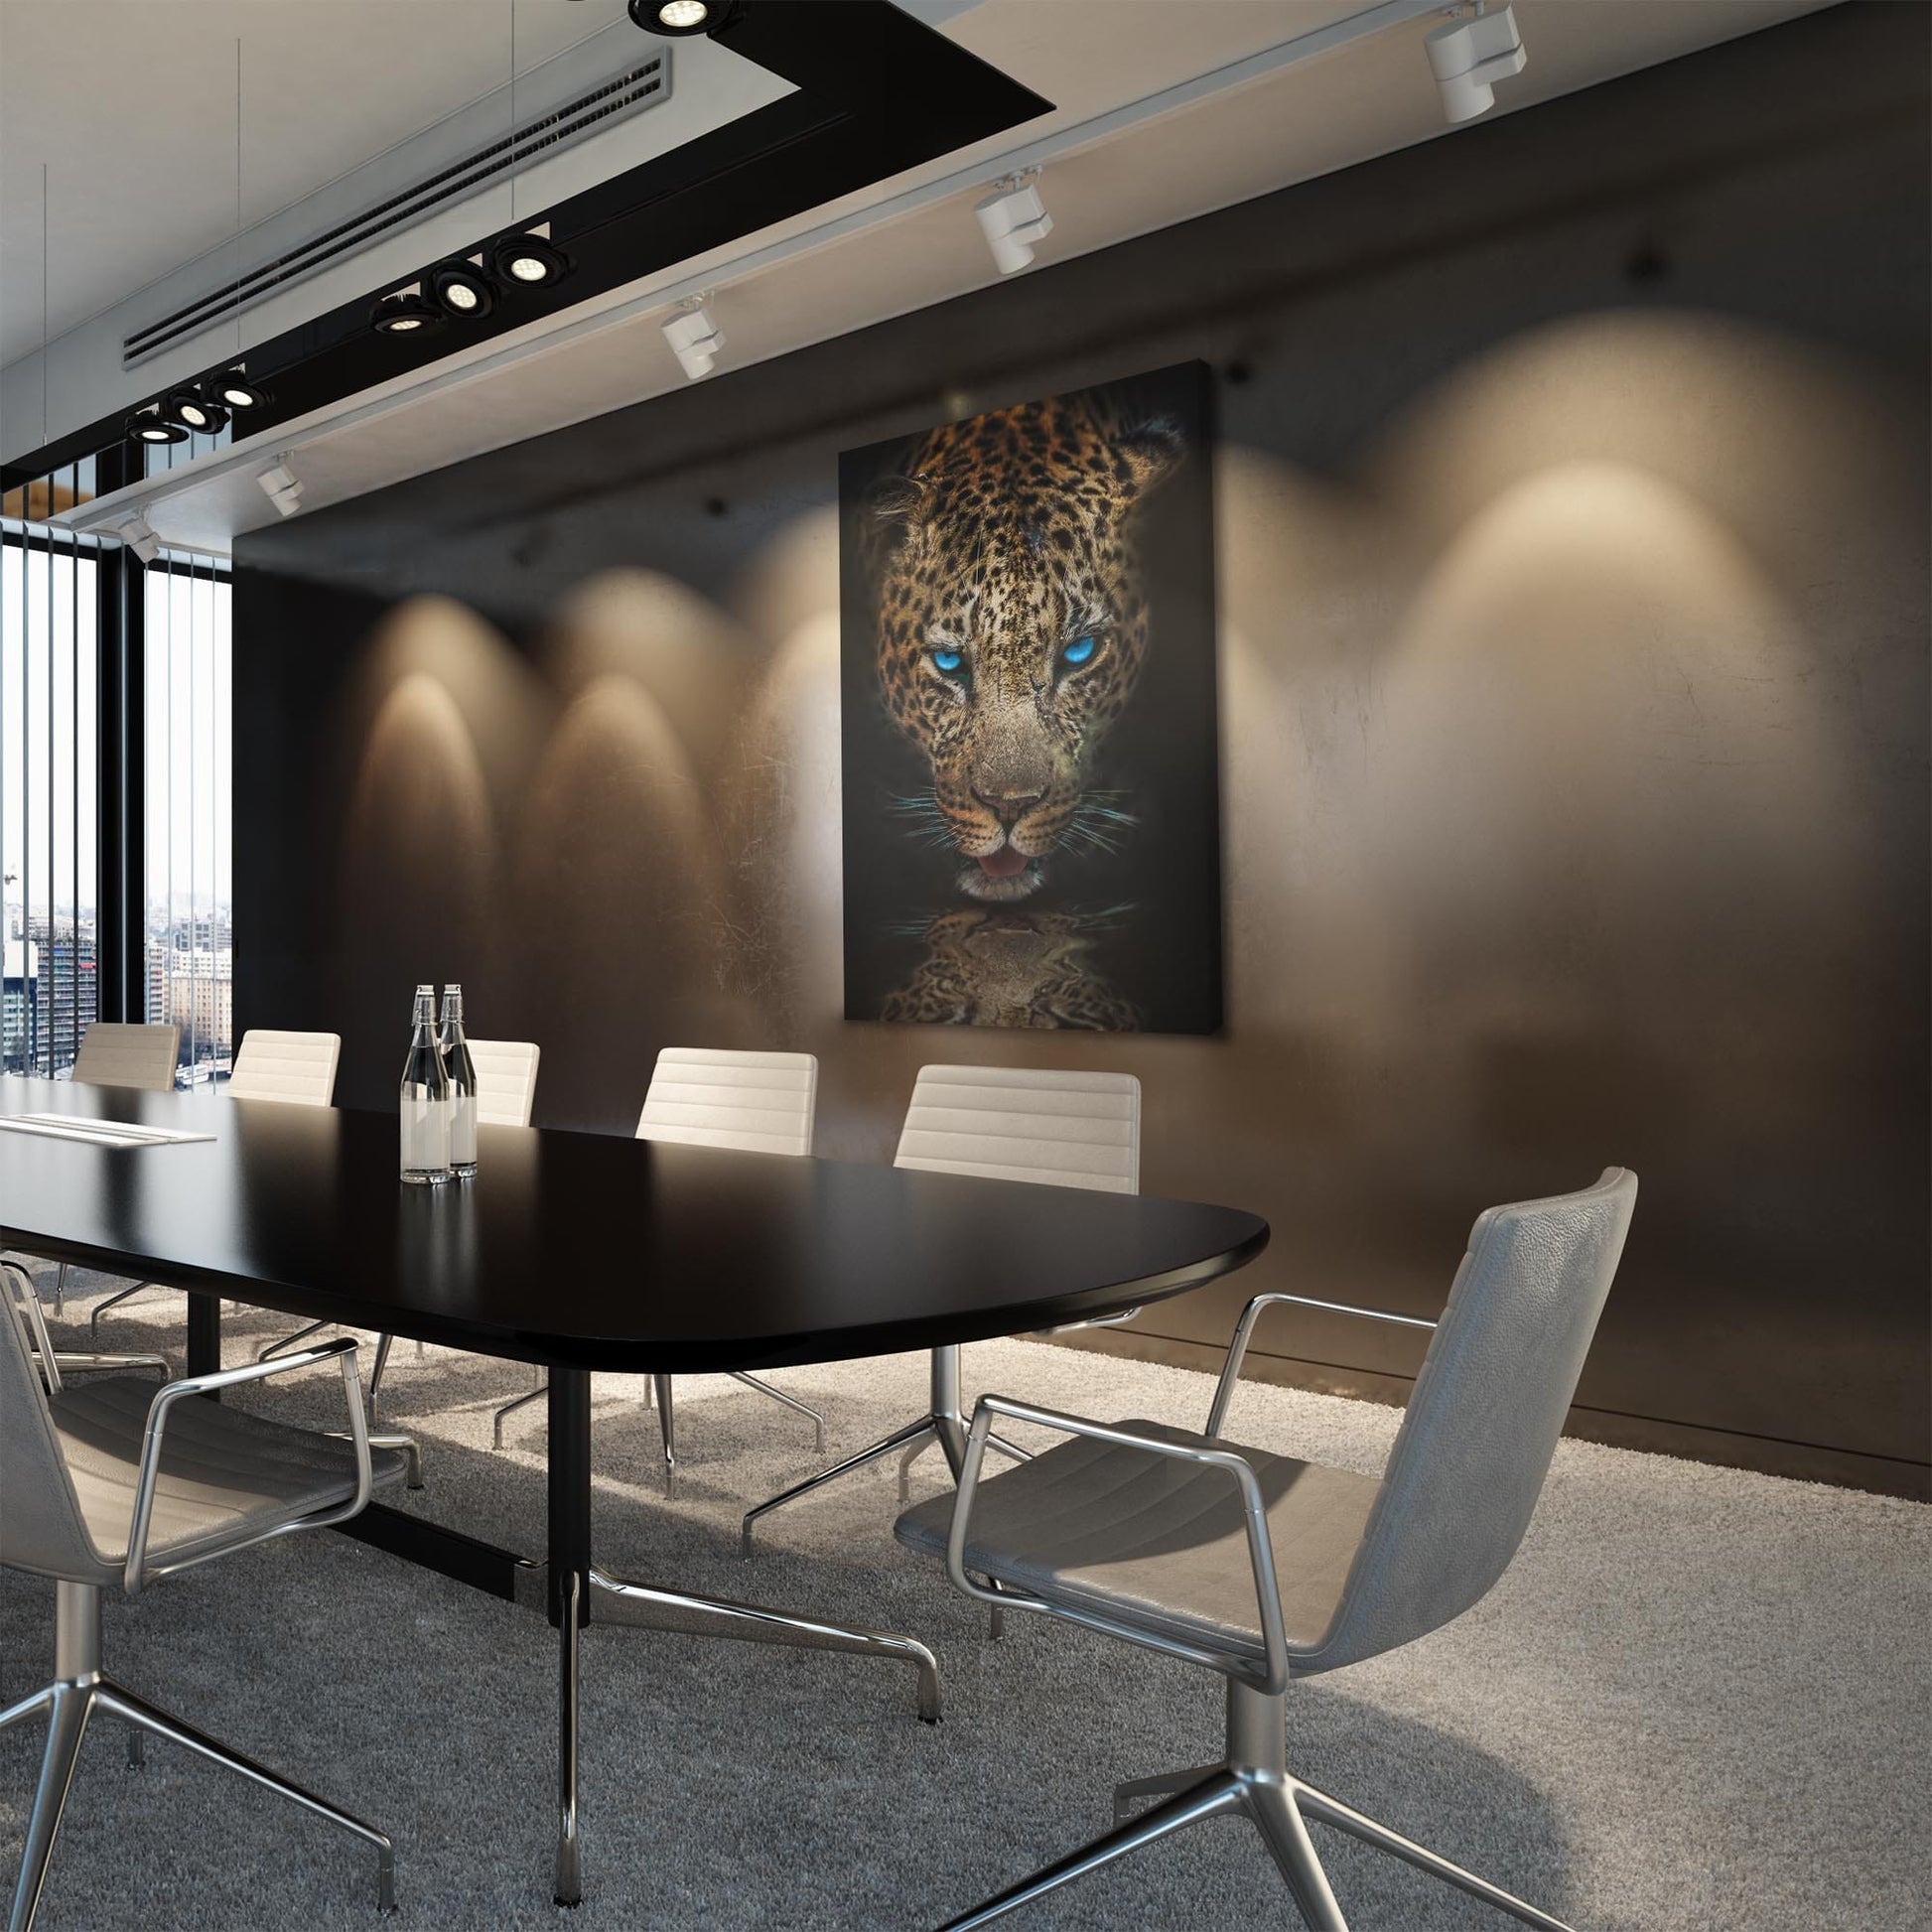 Thirsty Leopard Reflection Wall Art | Inspirational Wall Art Motivational Wall Art Quotes Office Art | ImpaktMaker Exclusive Canvas Art Portrait